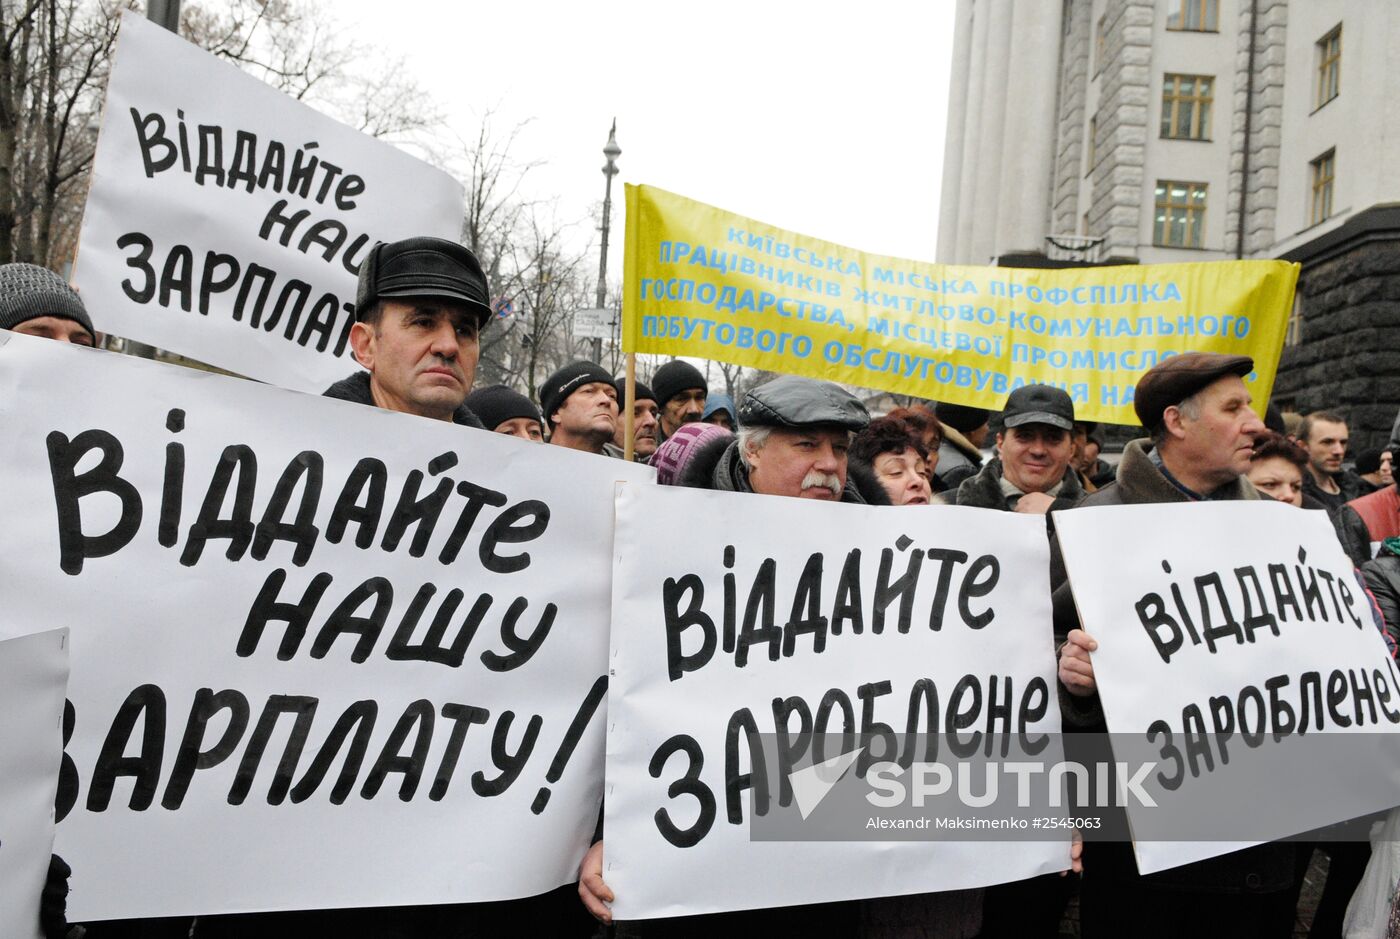 Rally of Kievpastrans employees